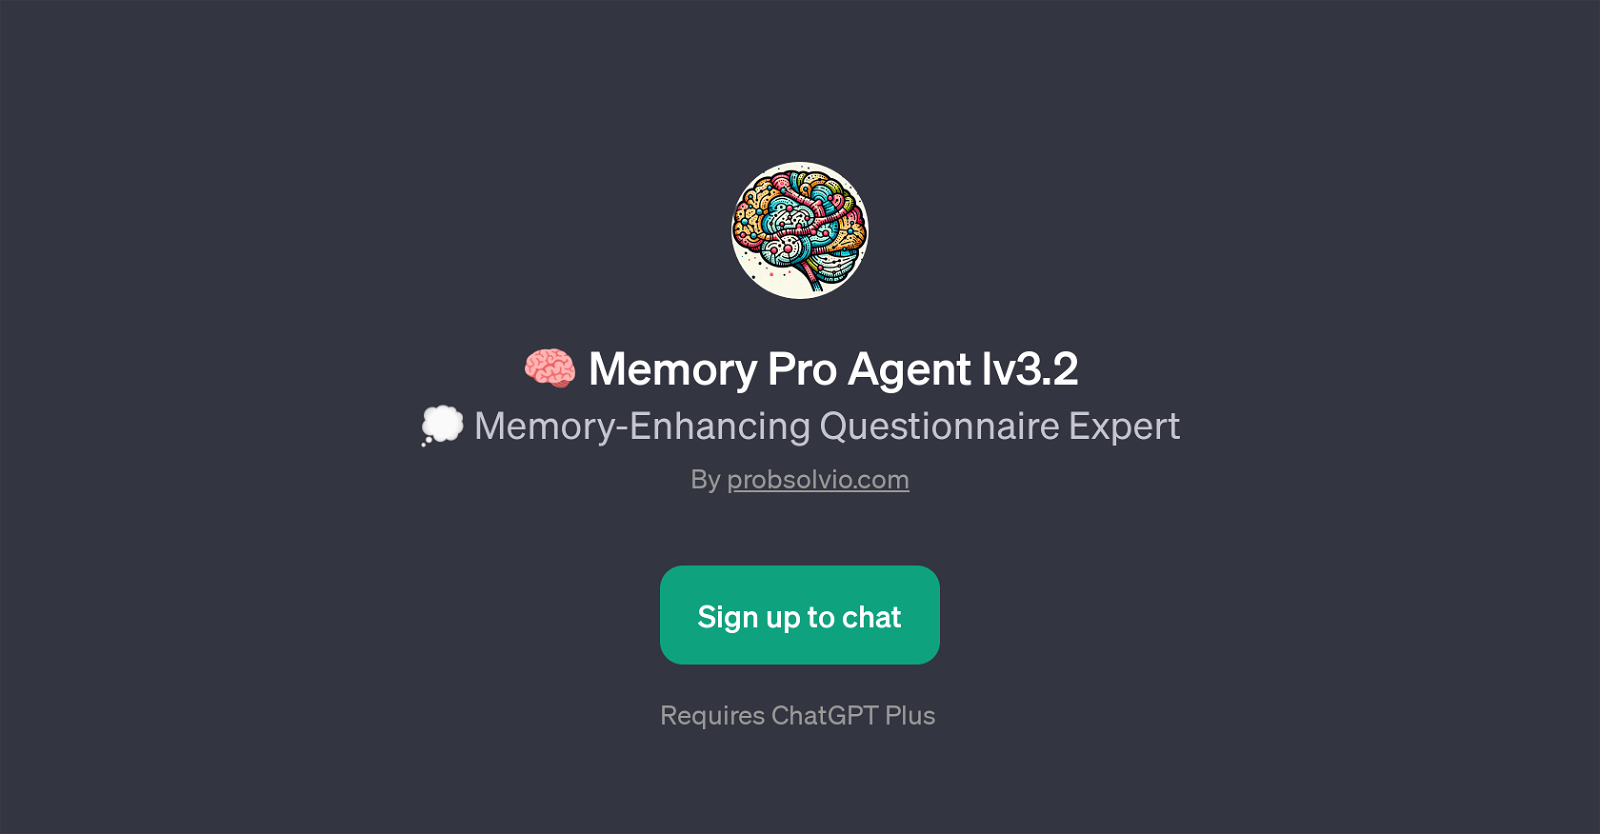 Memory Pro Agent lv3.2 website